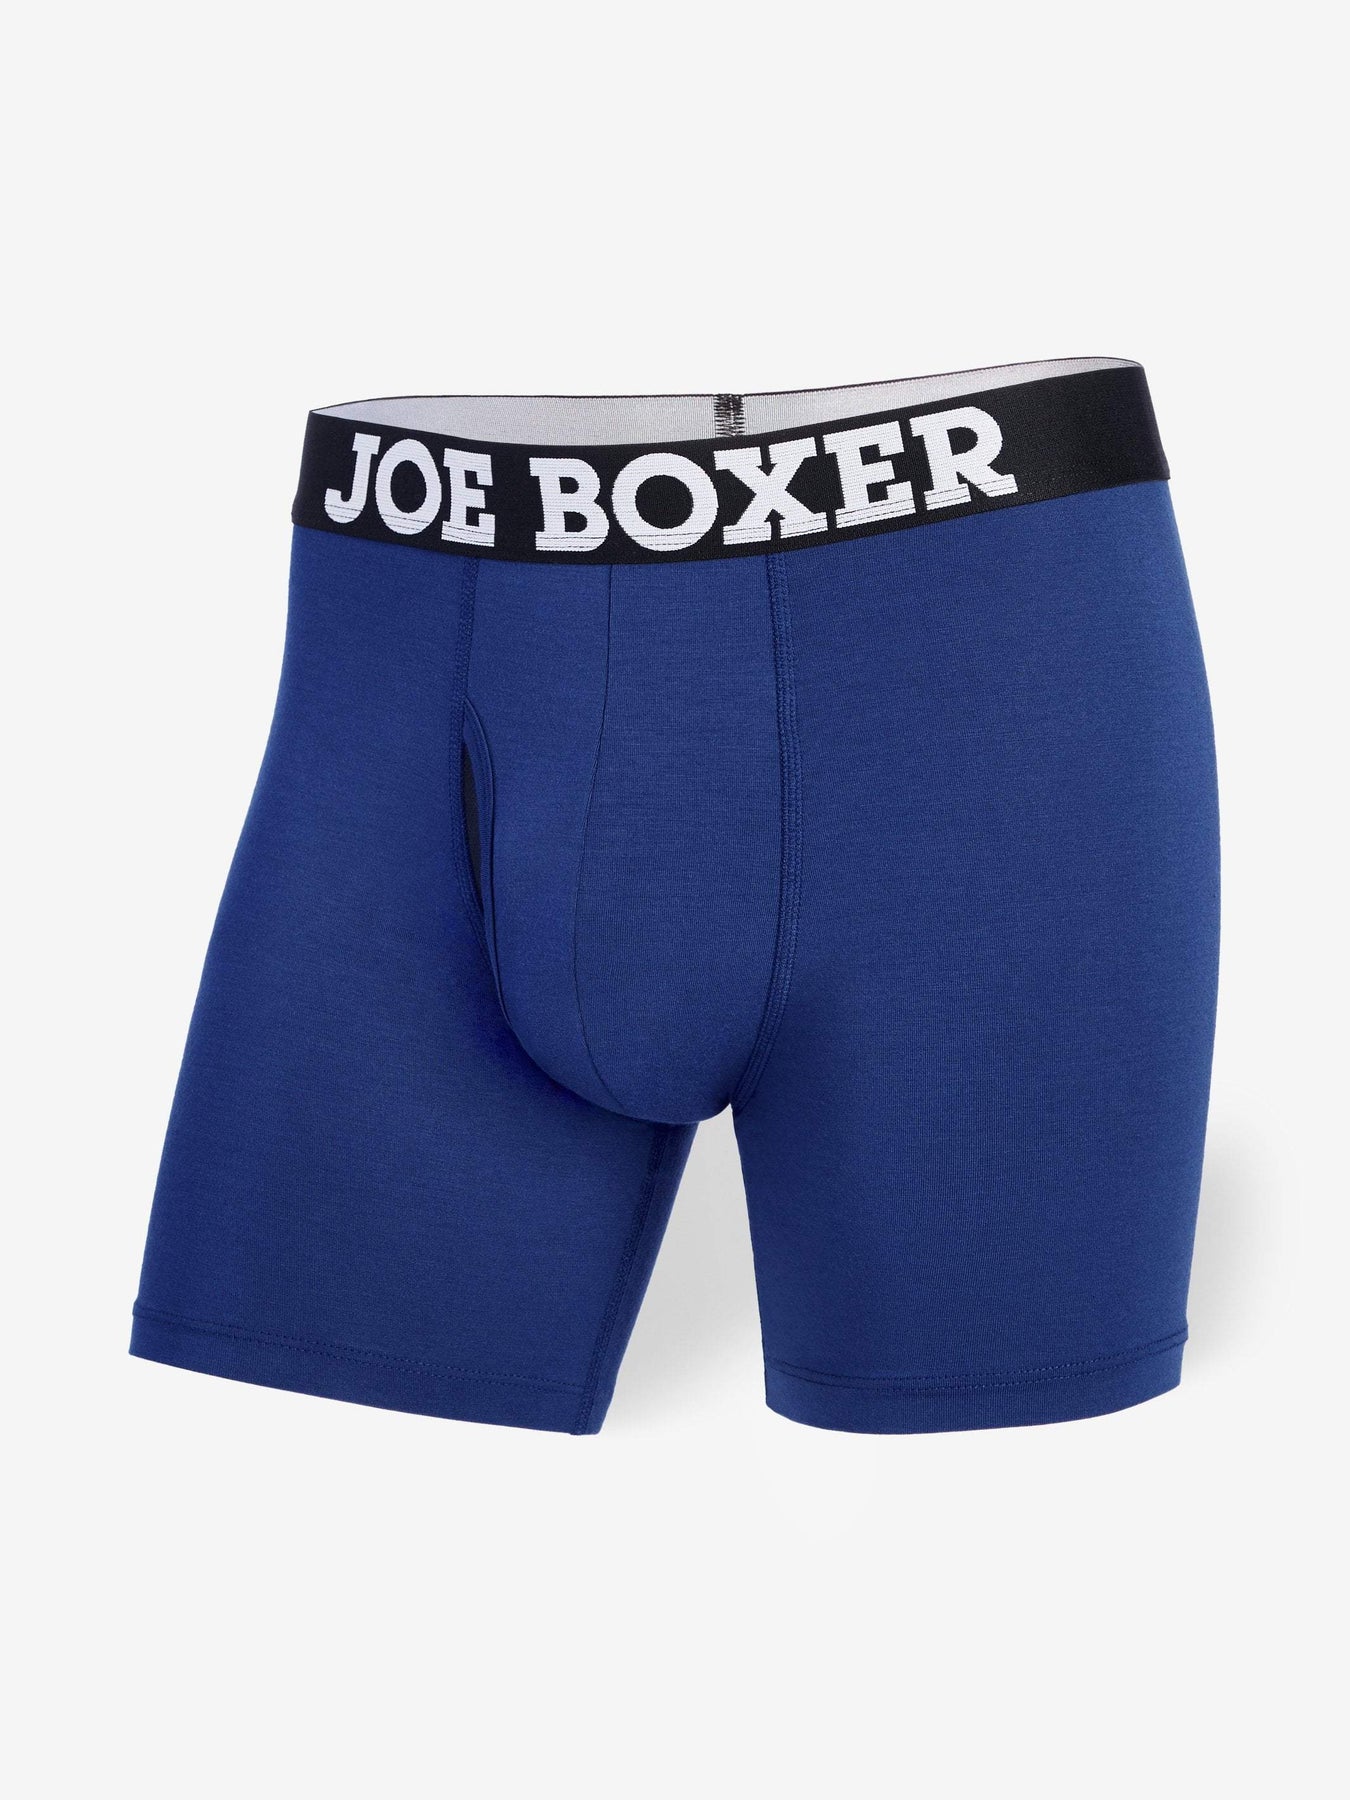 SUPERBODY Shiny Boxers - Men's Underwear Boxers – Bunny Bumm